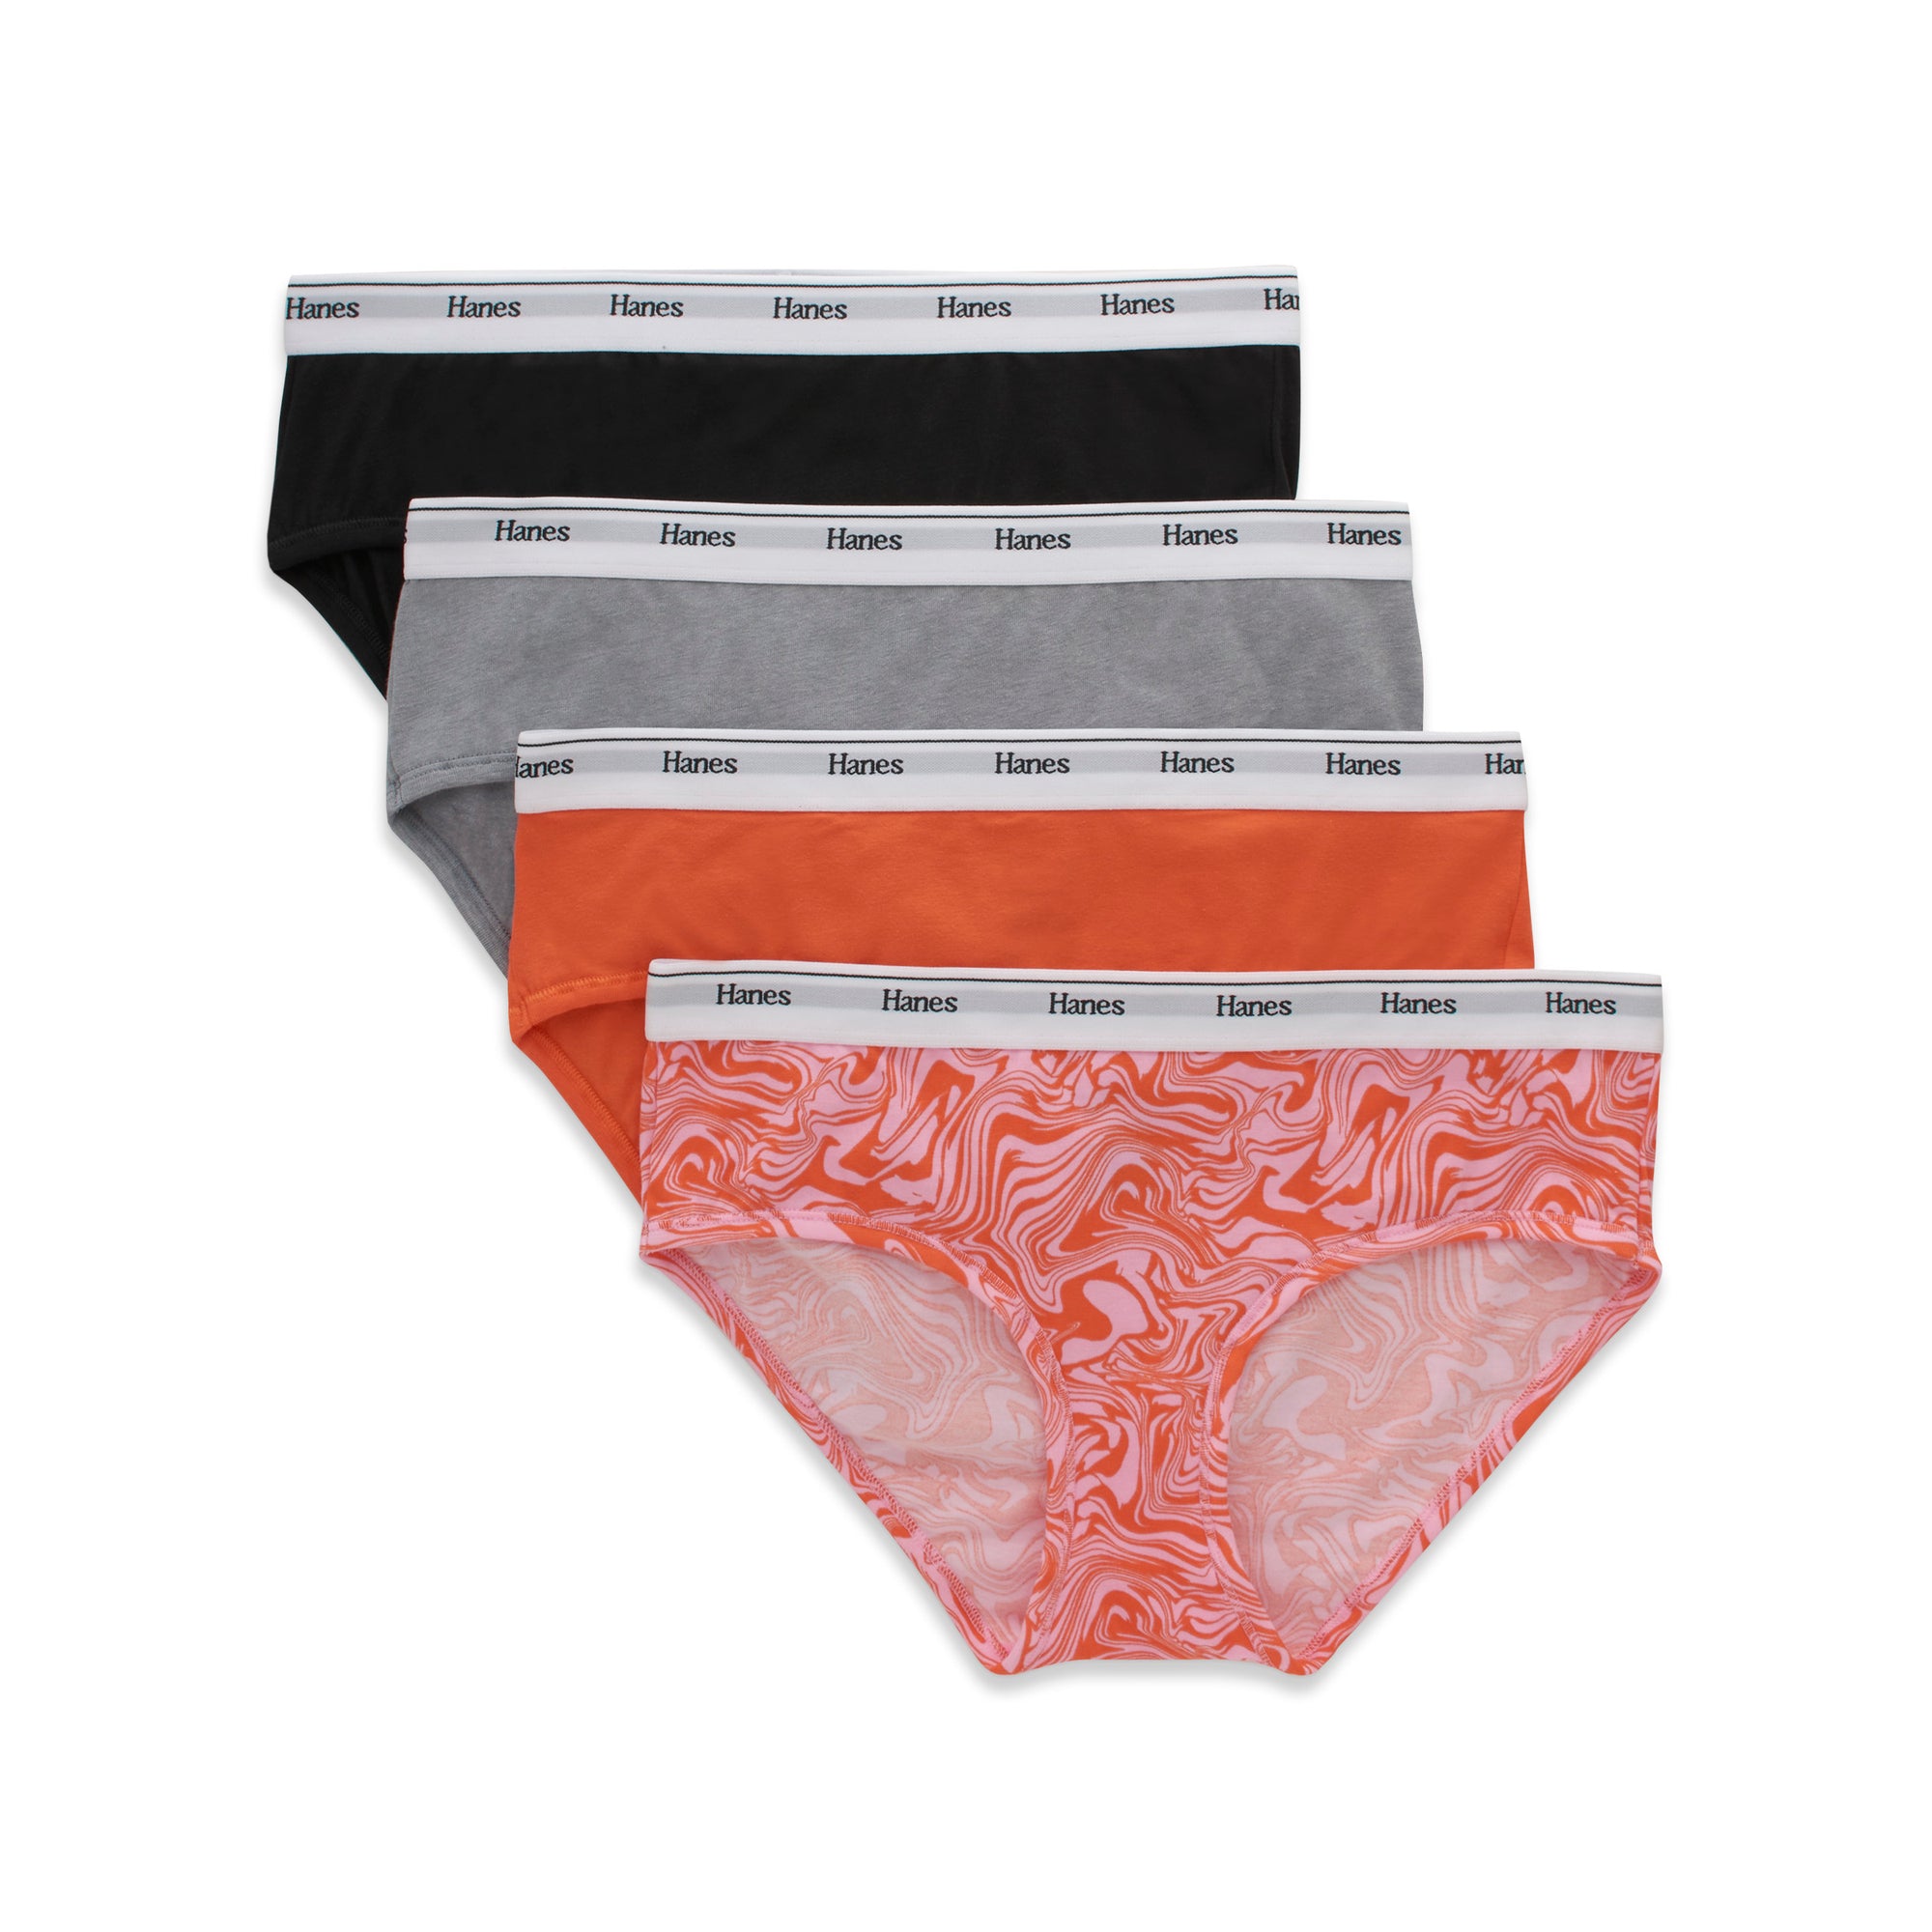 Hanes Women's Originals Panties Pack, Breathable Cotton Stretch Underwear,  6-Pack, Fashion Color Mix, Medium